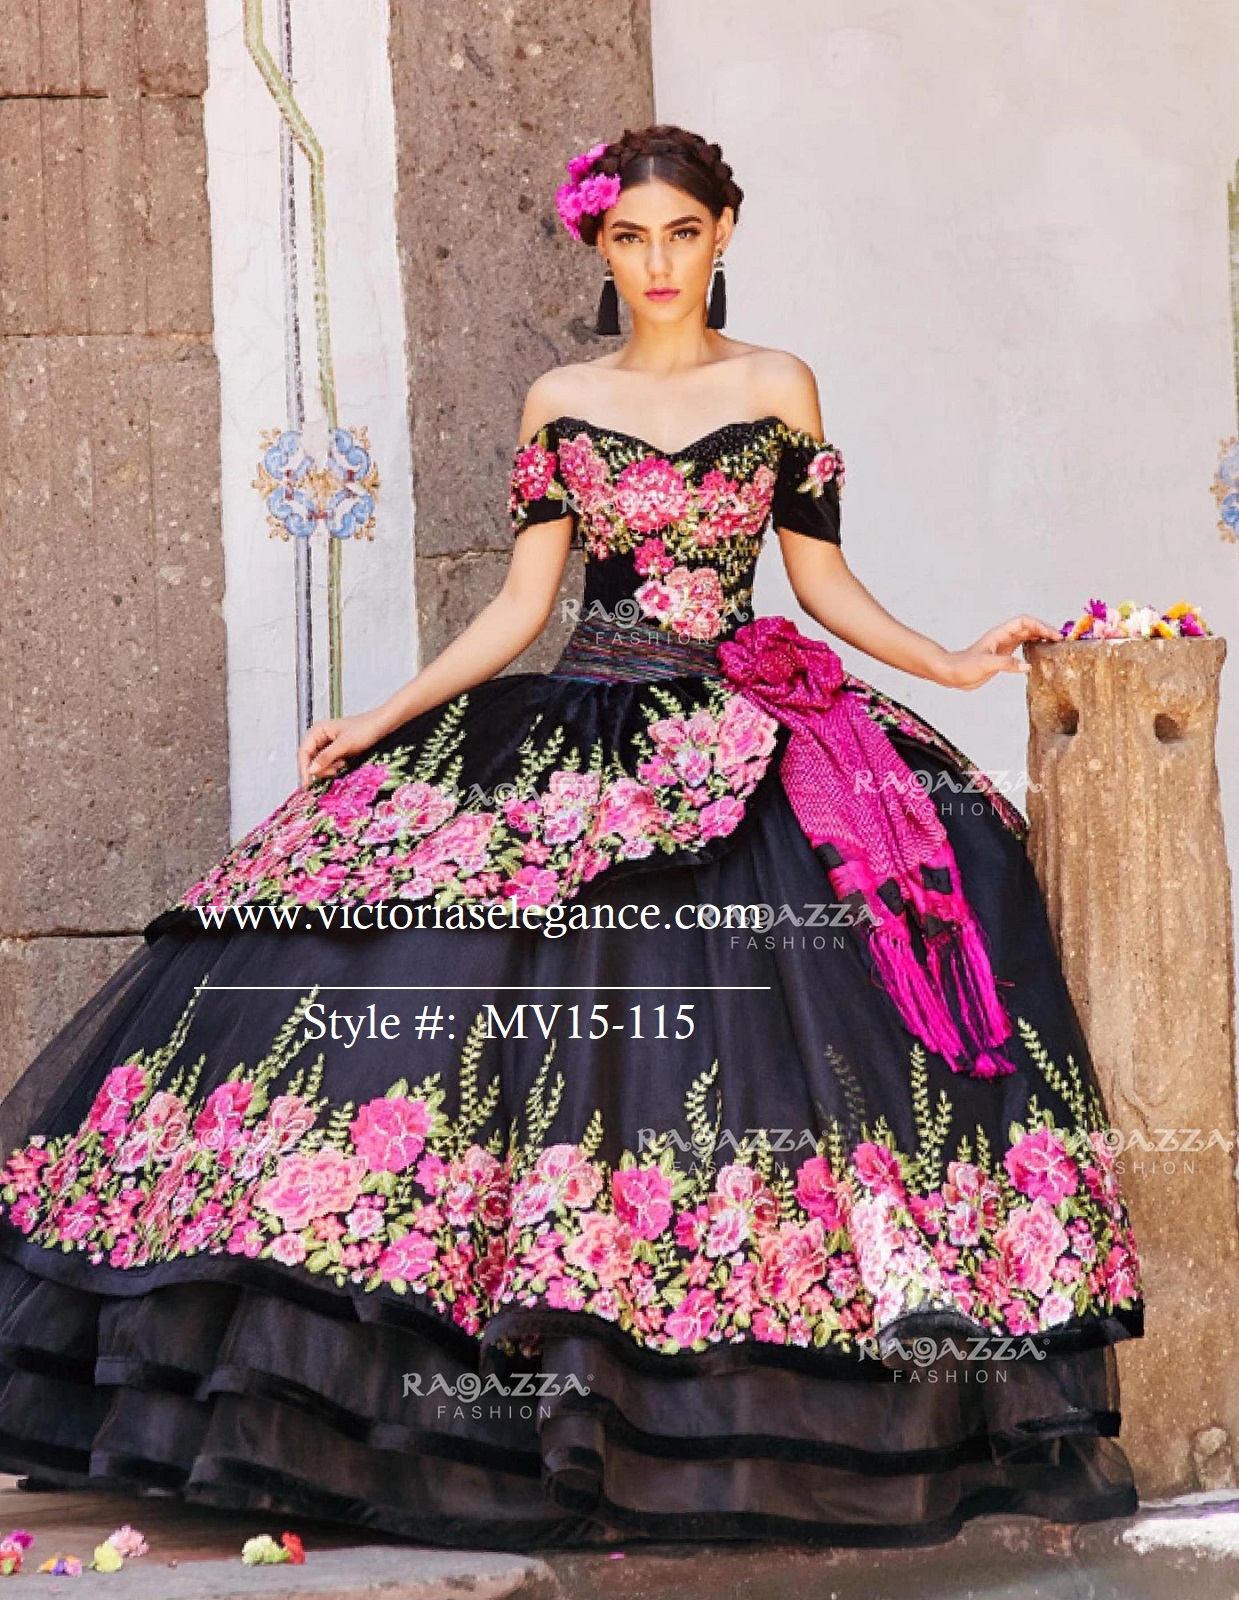 Ragazza Fashion Floral Charro Ball Gown